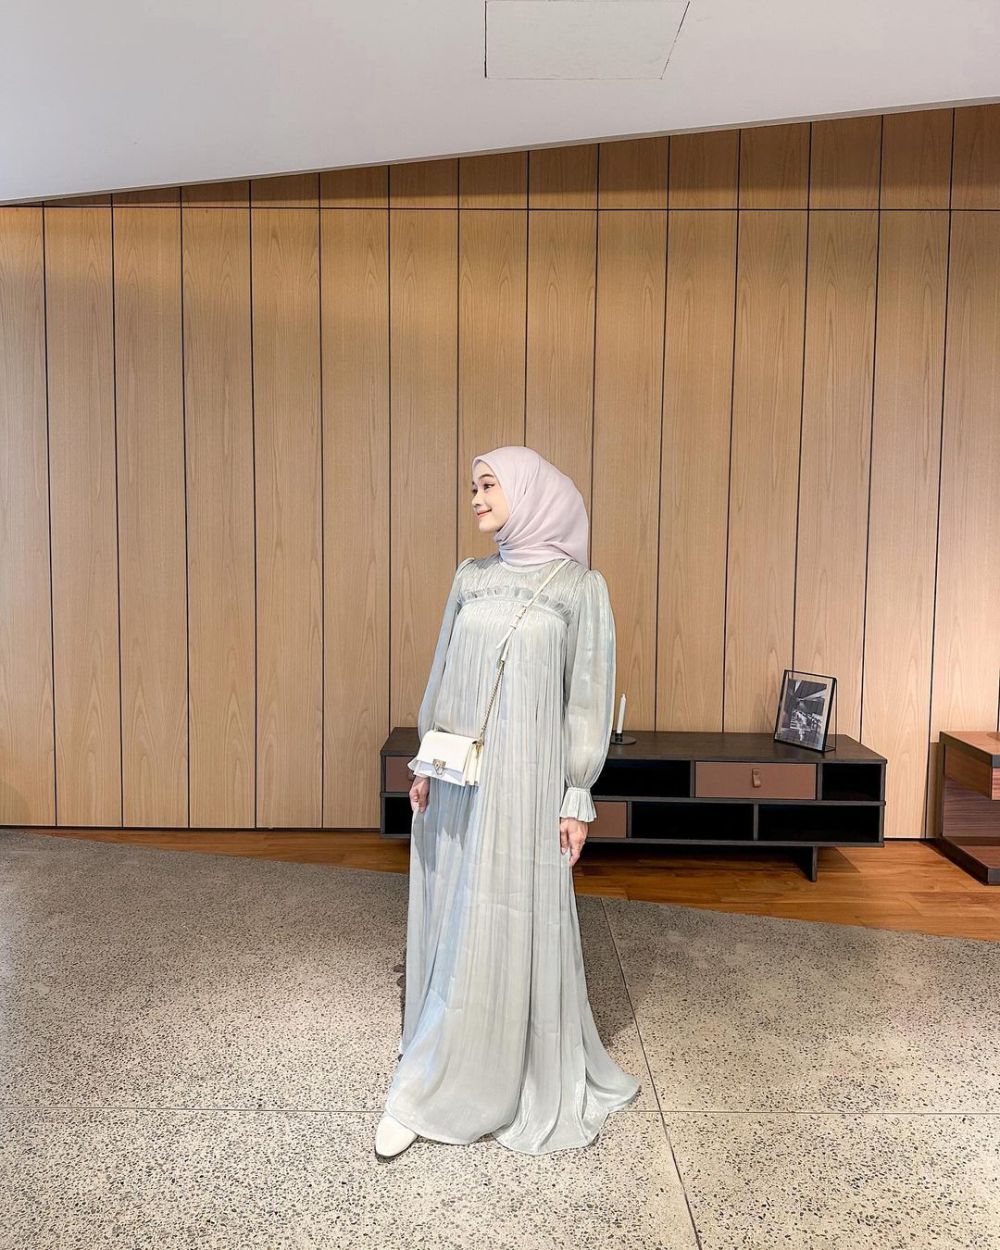 8 Ide Dress Muslimah Bahan Satin untuk Lebaran ala Influencer Hijab!